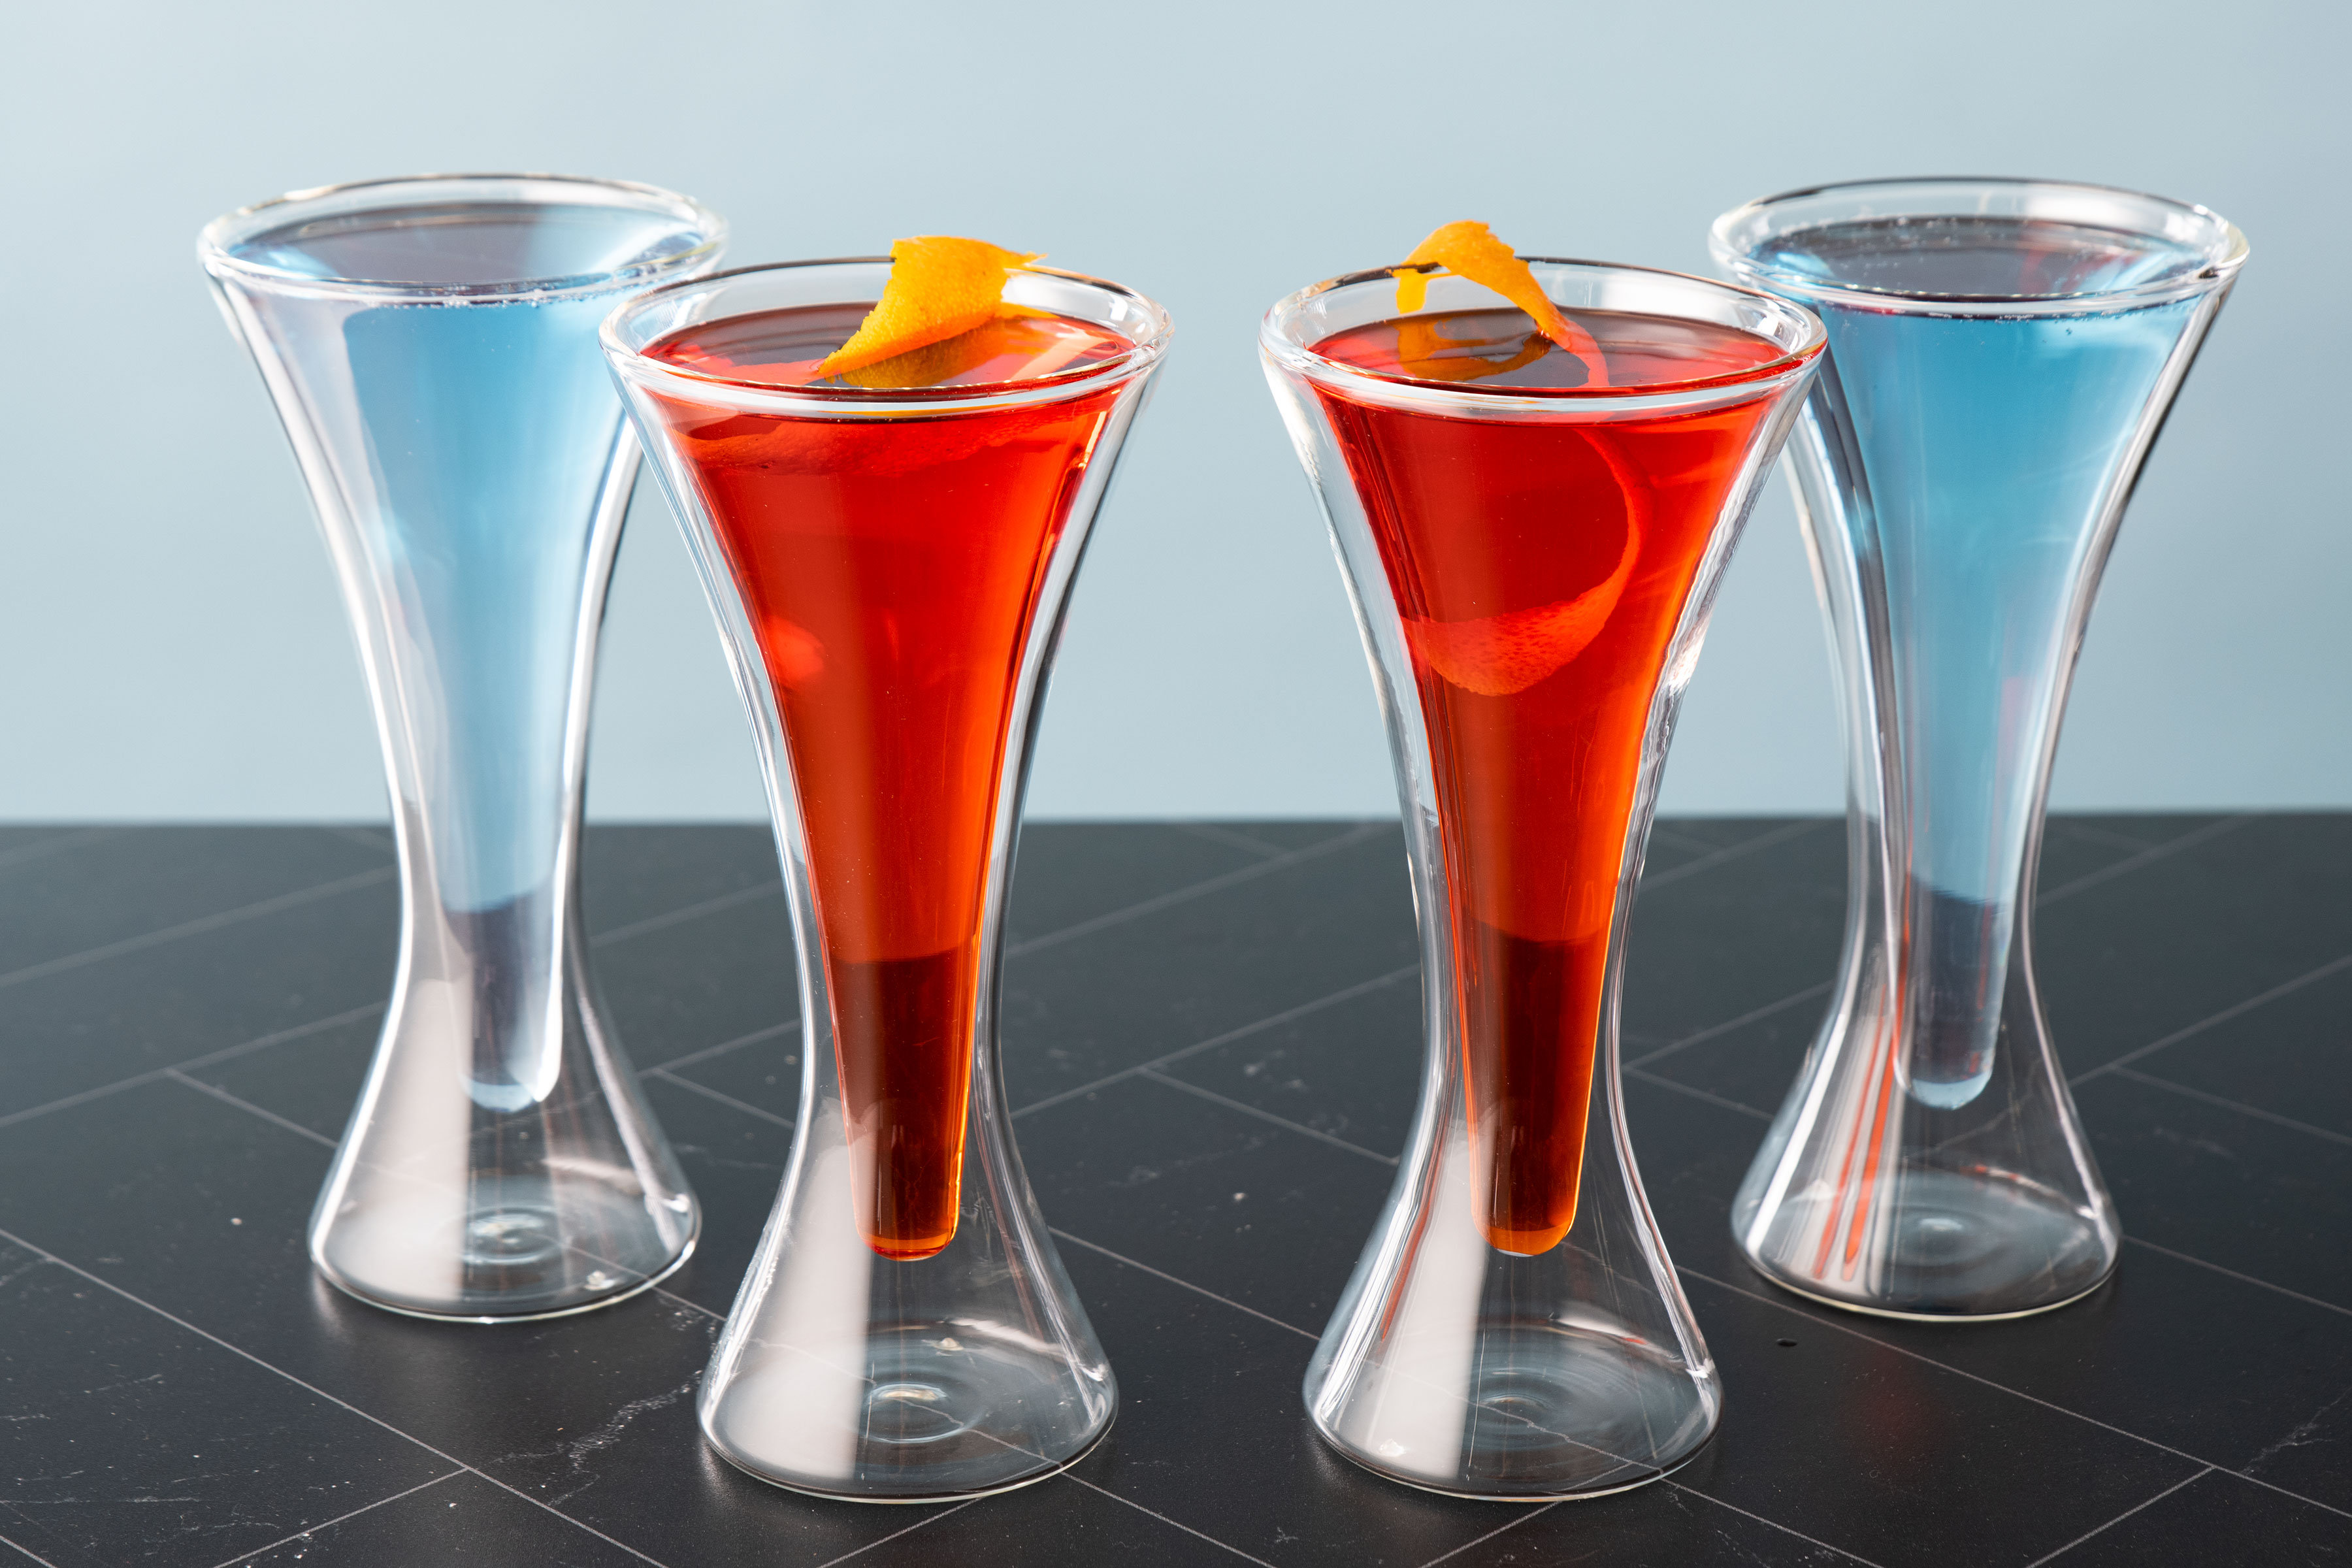 Lemonsoda 4 - Piece 7oz. Glass Martini Glass Glassware Set